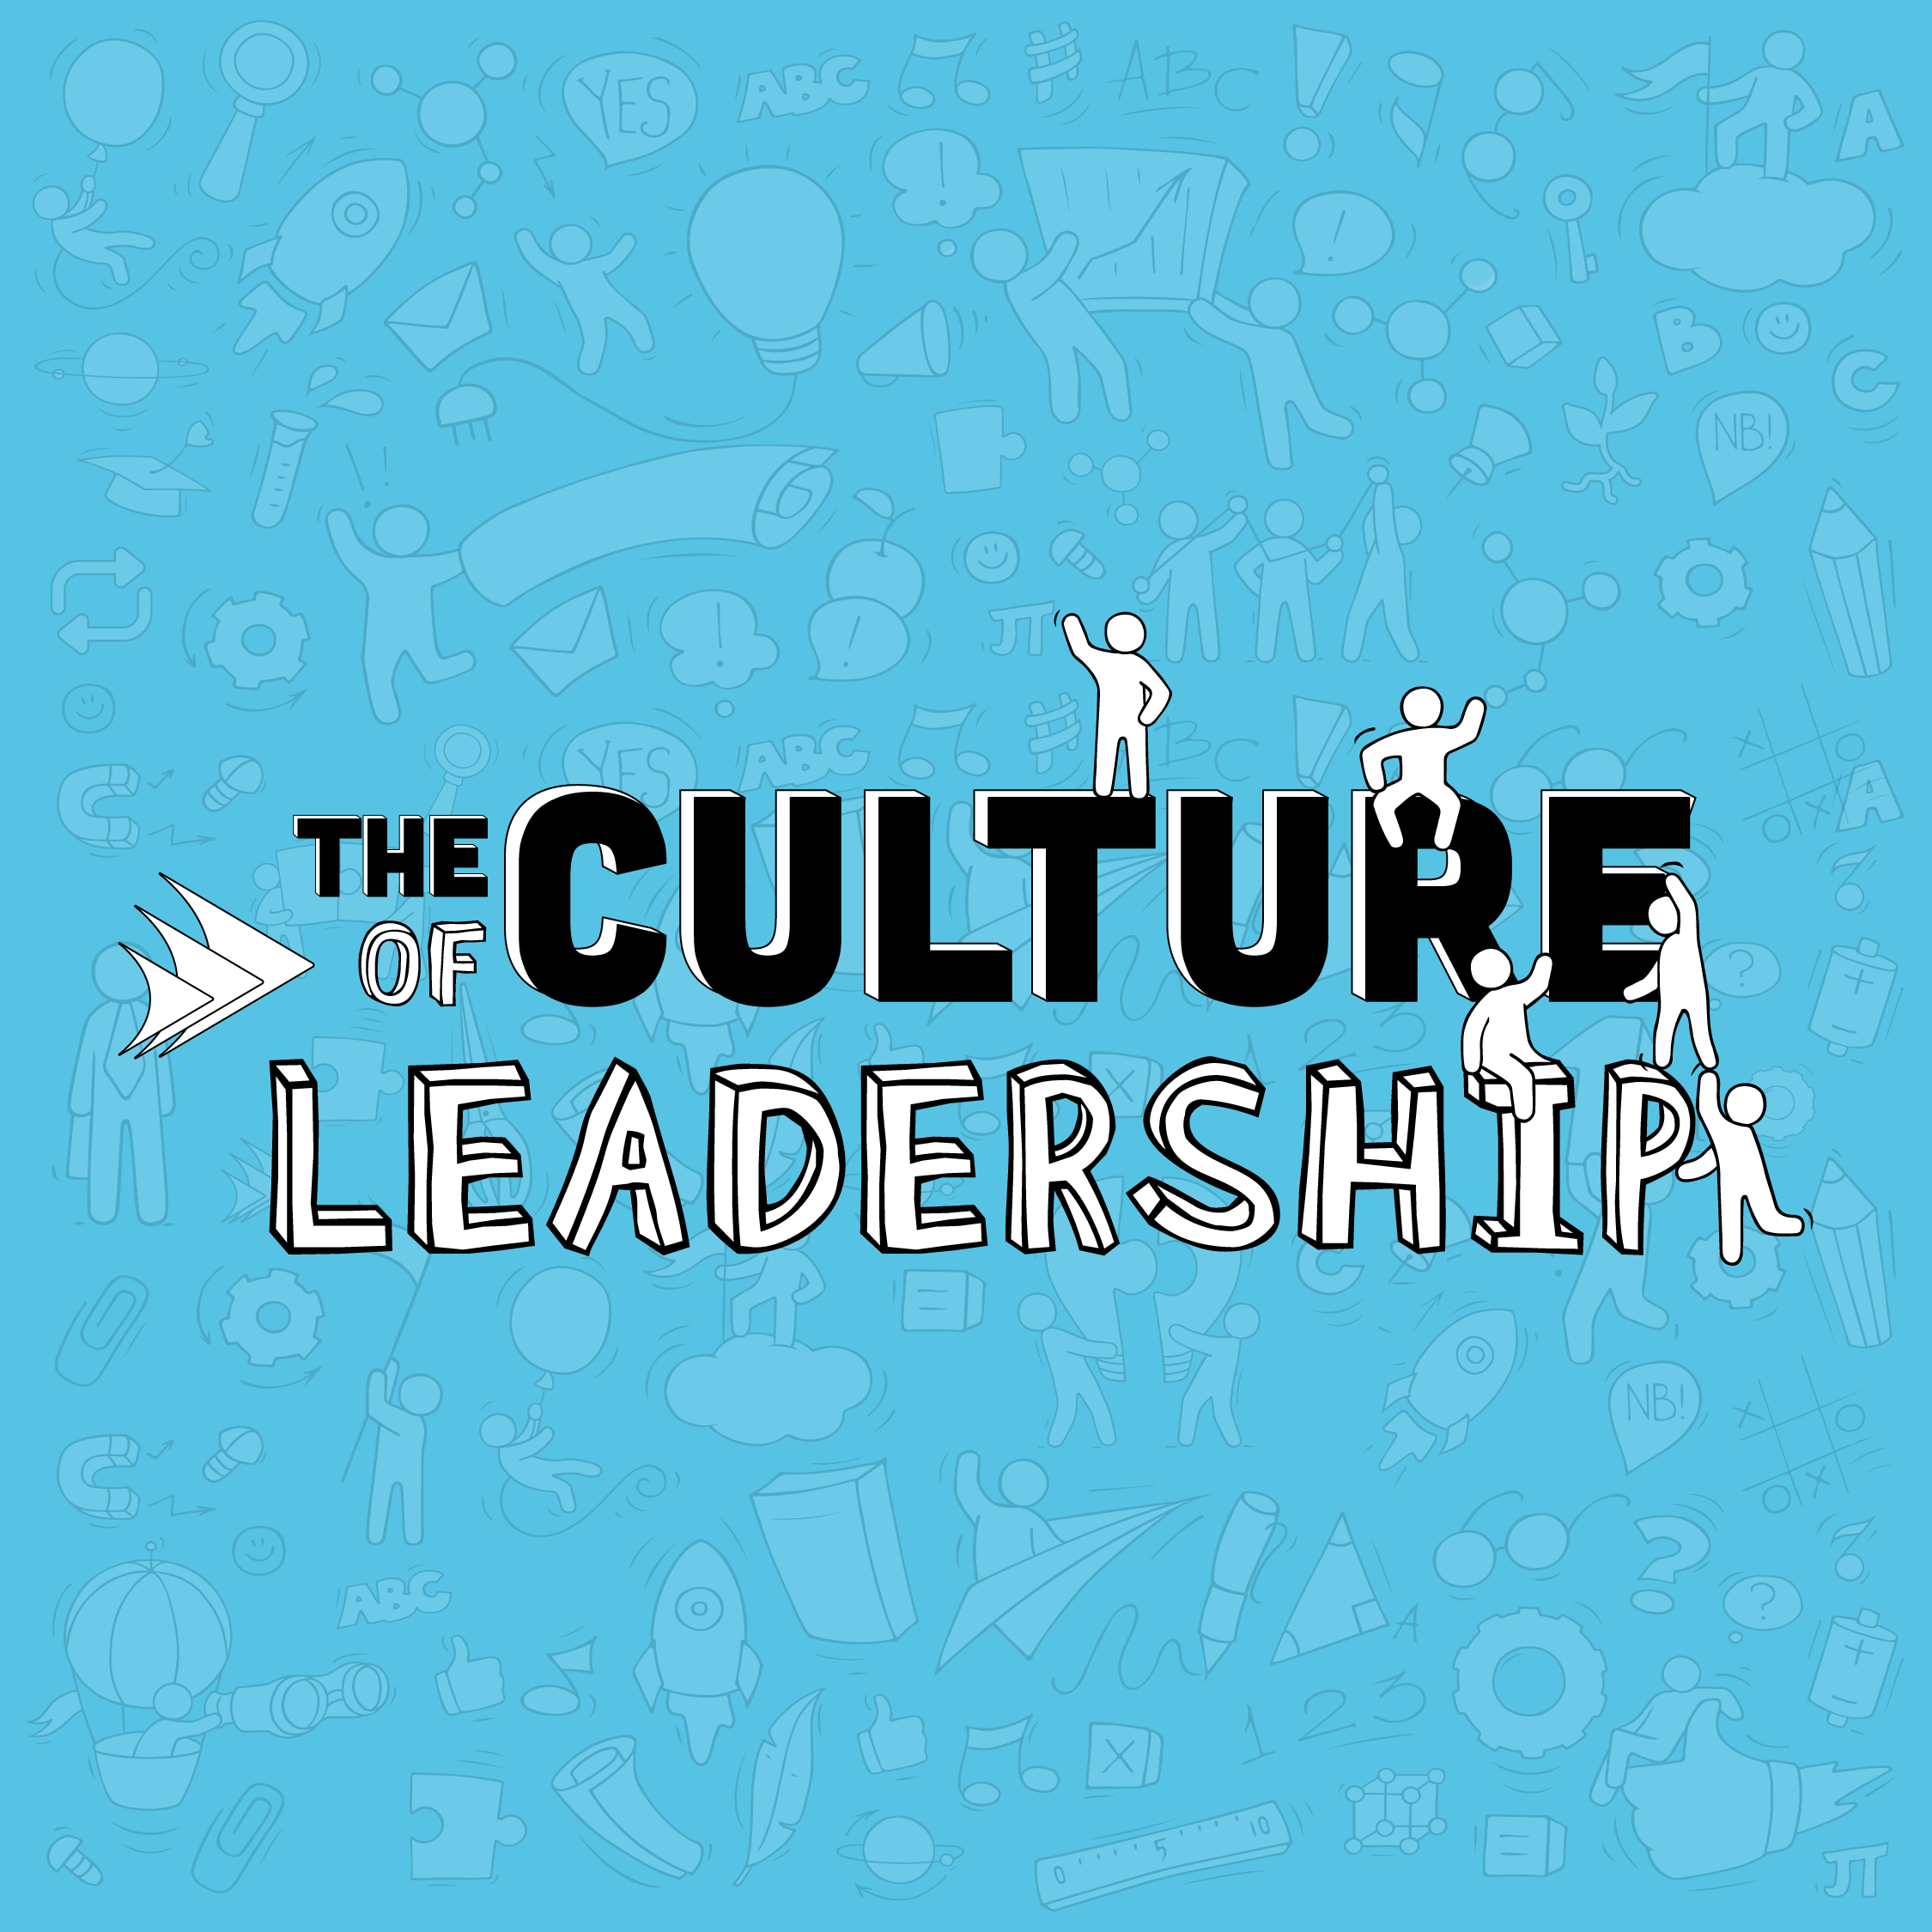 60. The Culture of Ubuntu Leadership